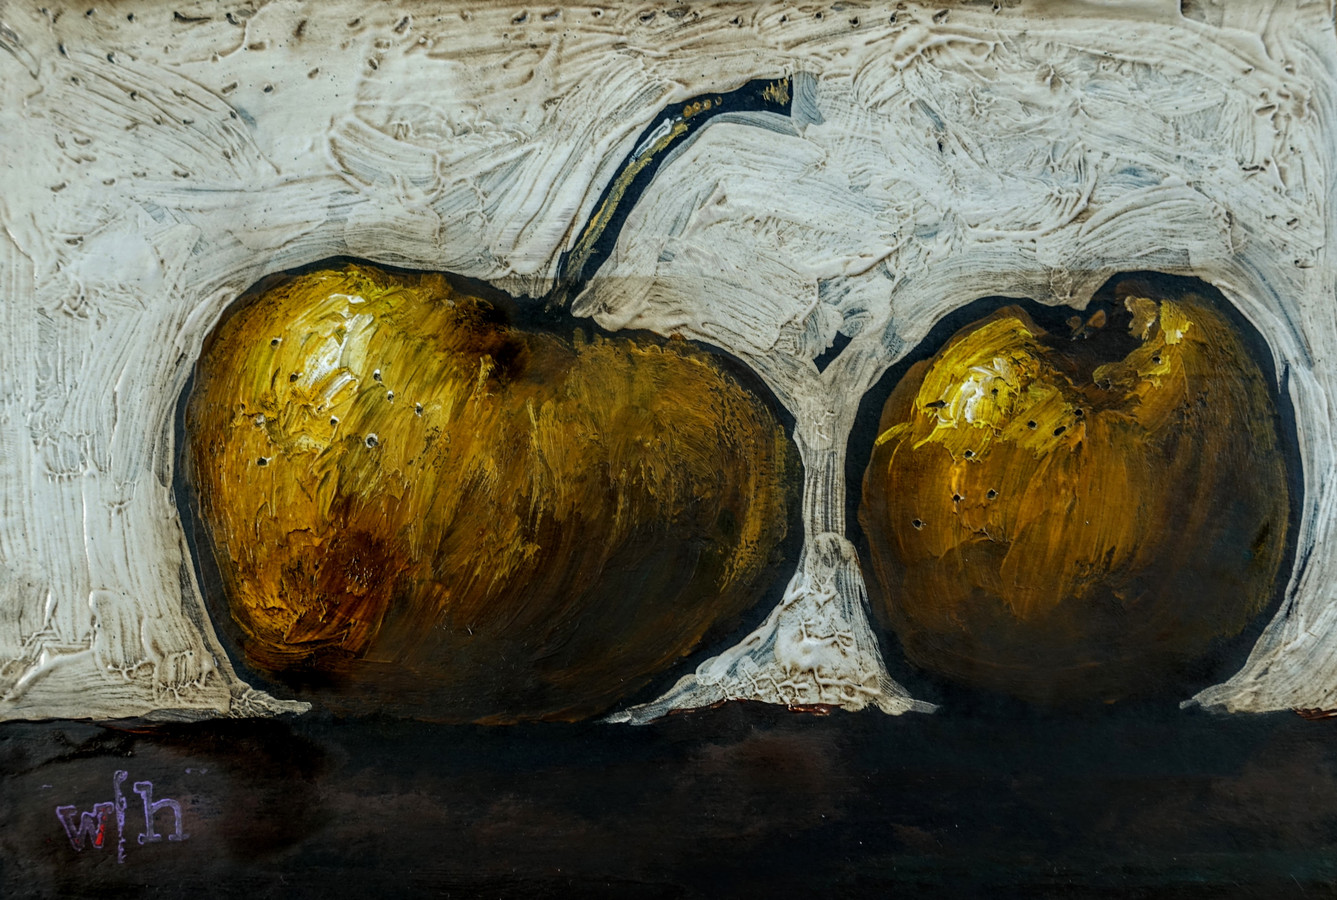 Wim Hofman: Fruit